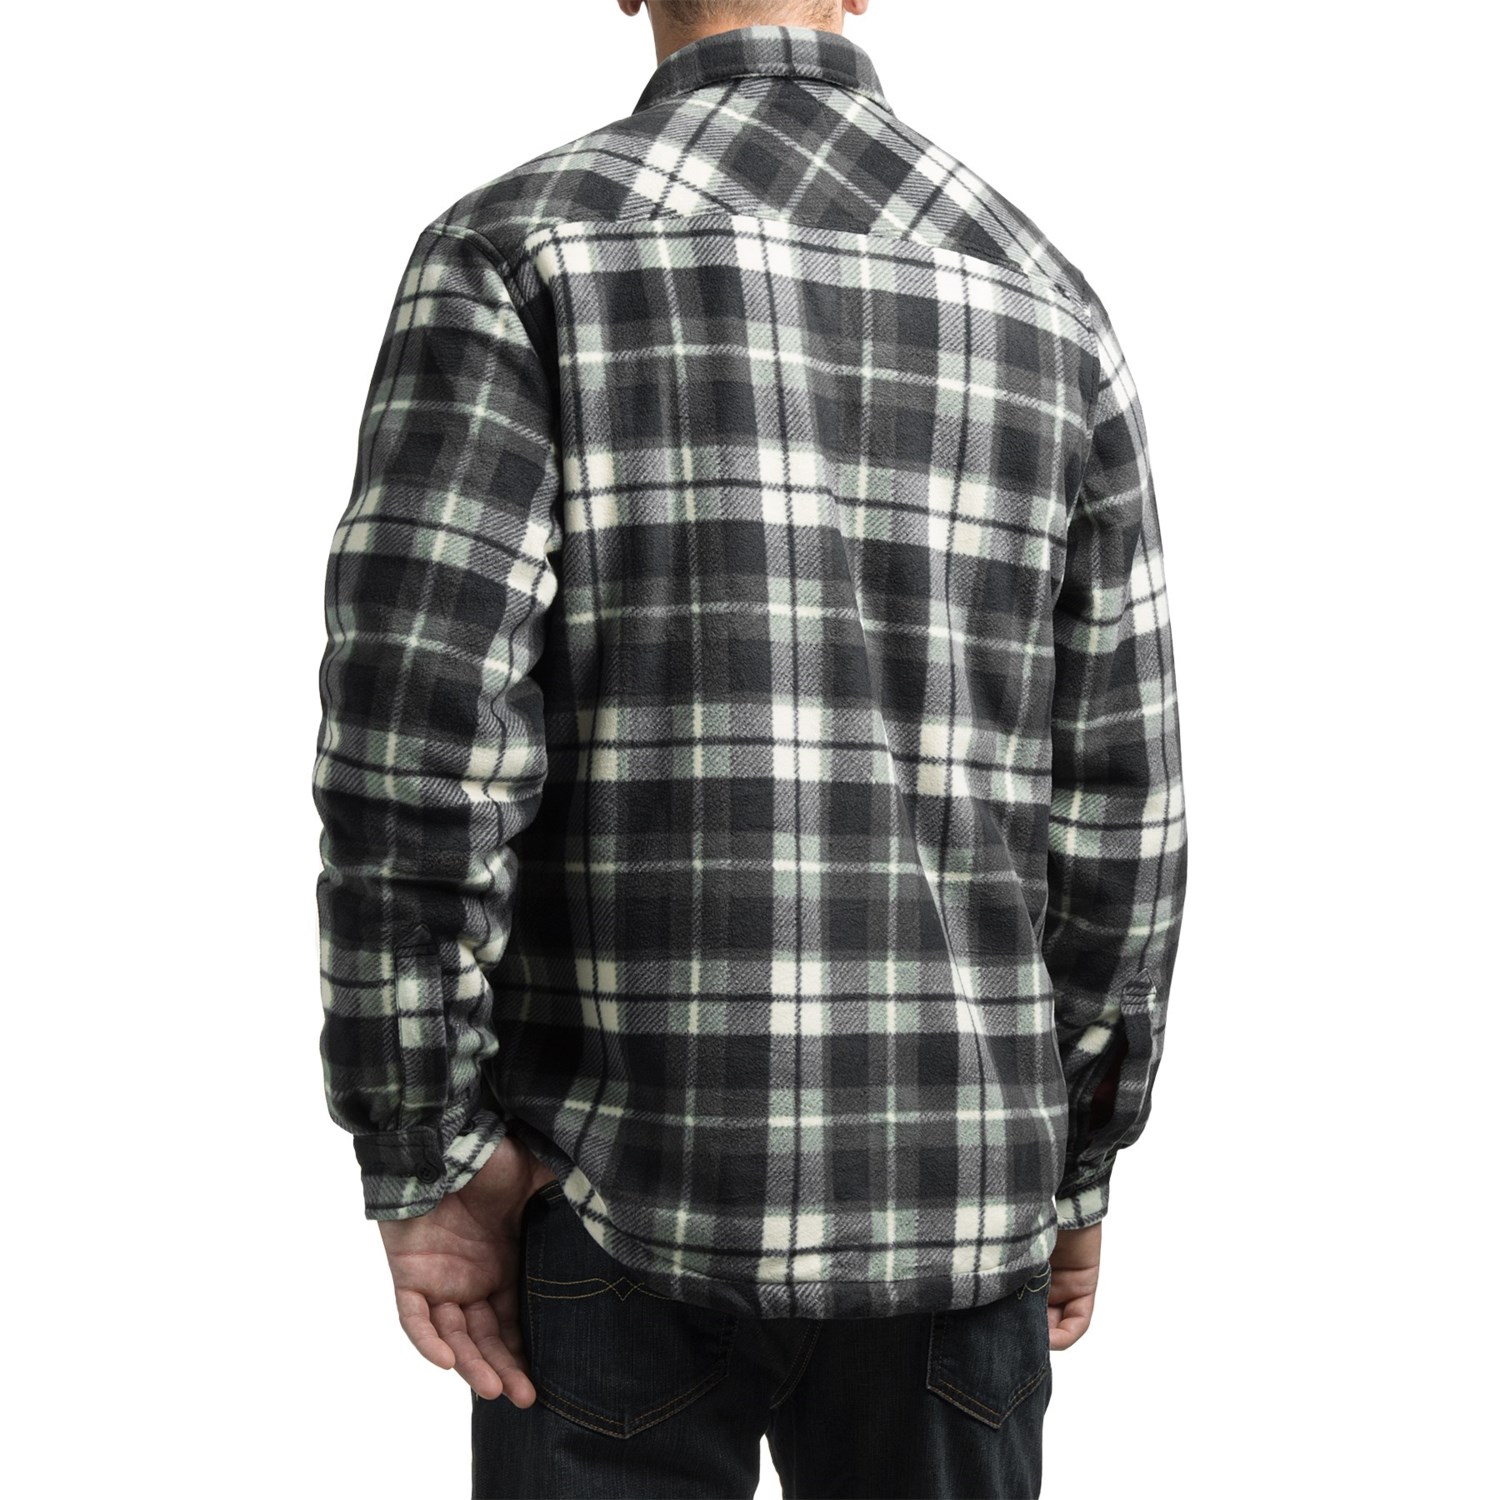 Coleman Fleece Shirt Jacket (For Men) - Save 65%